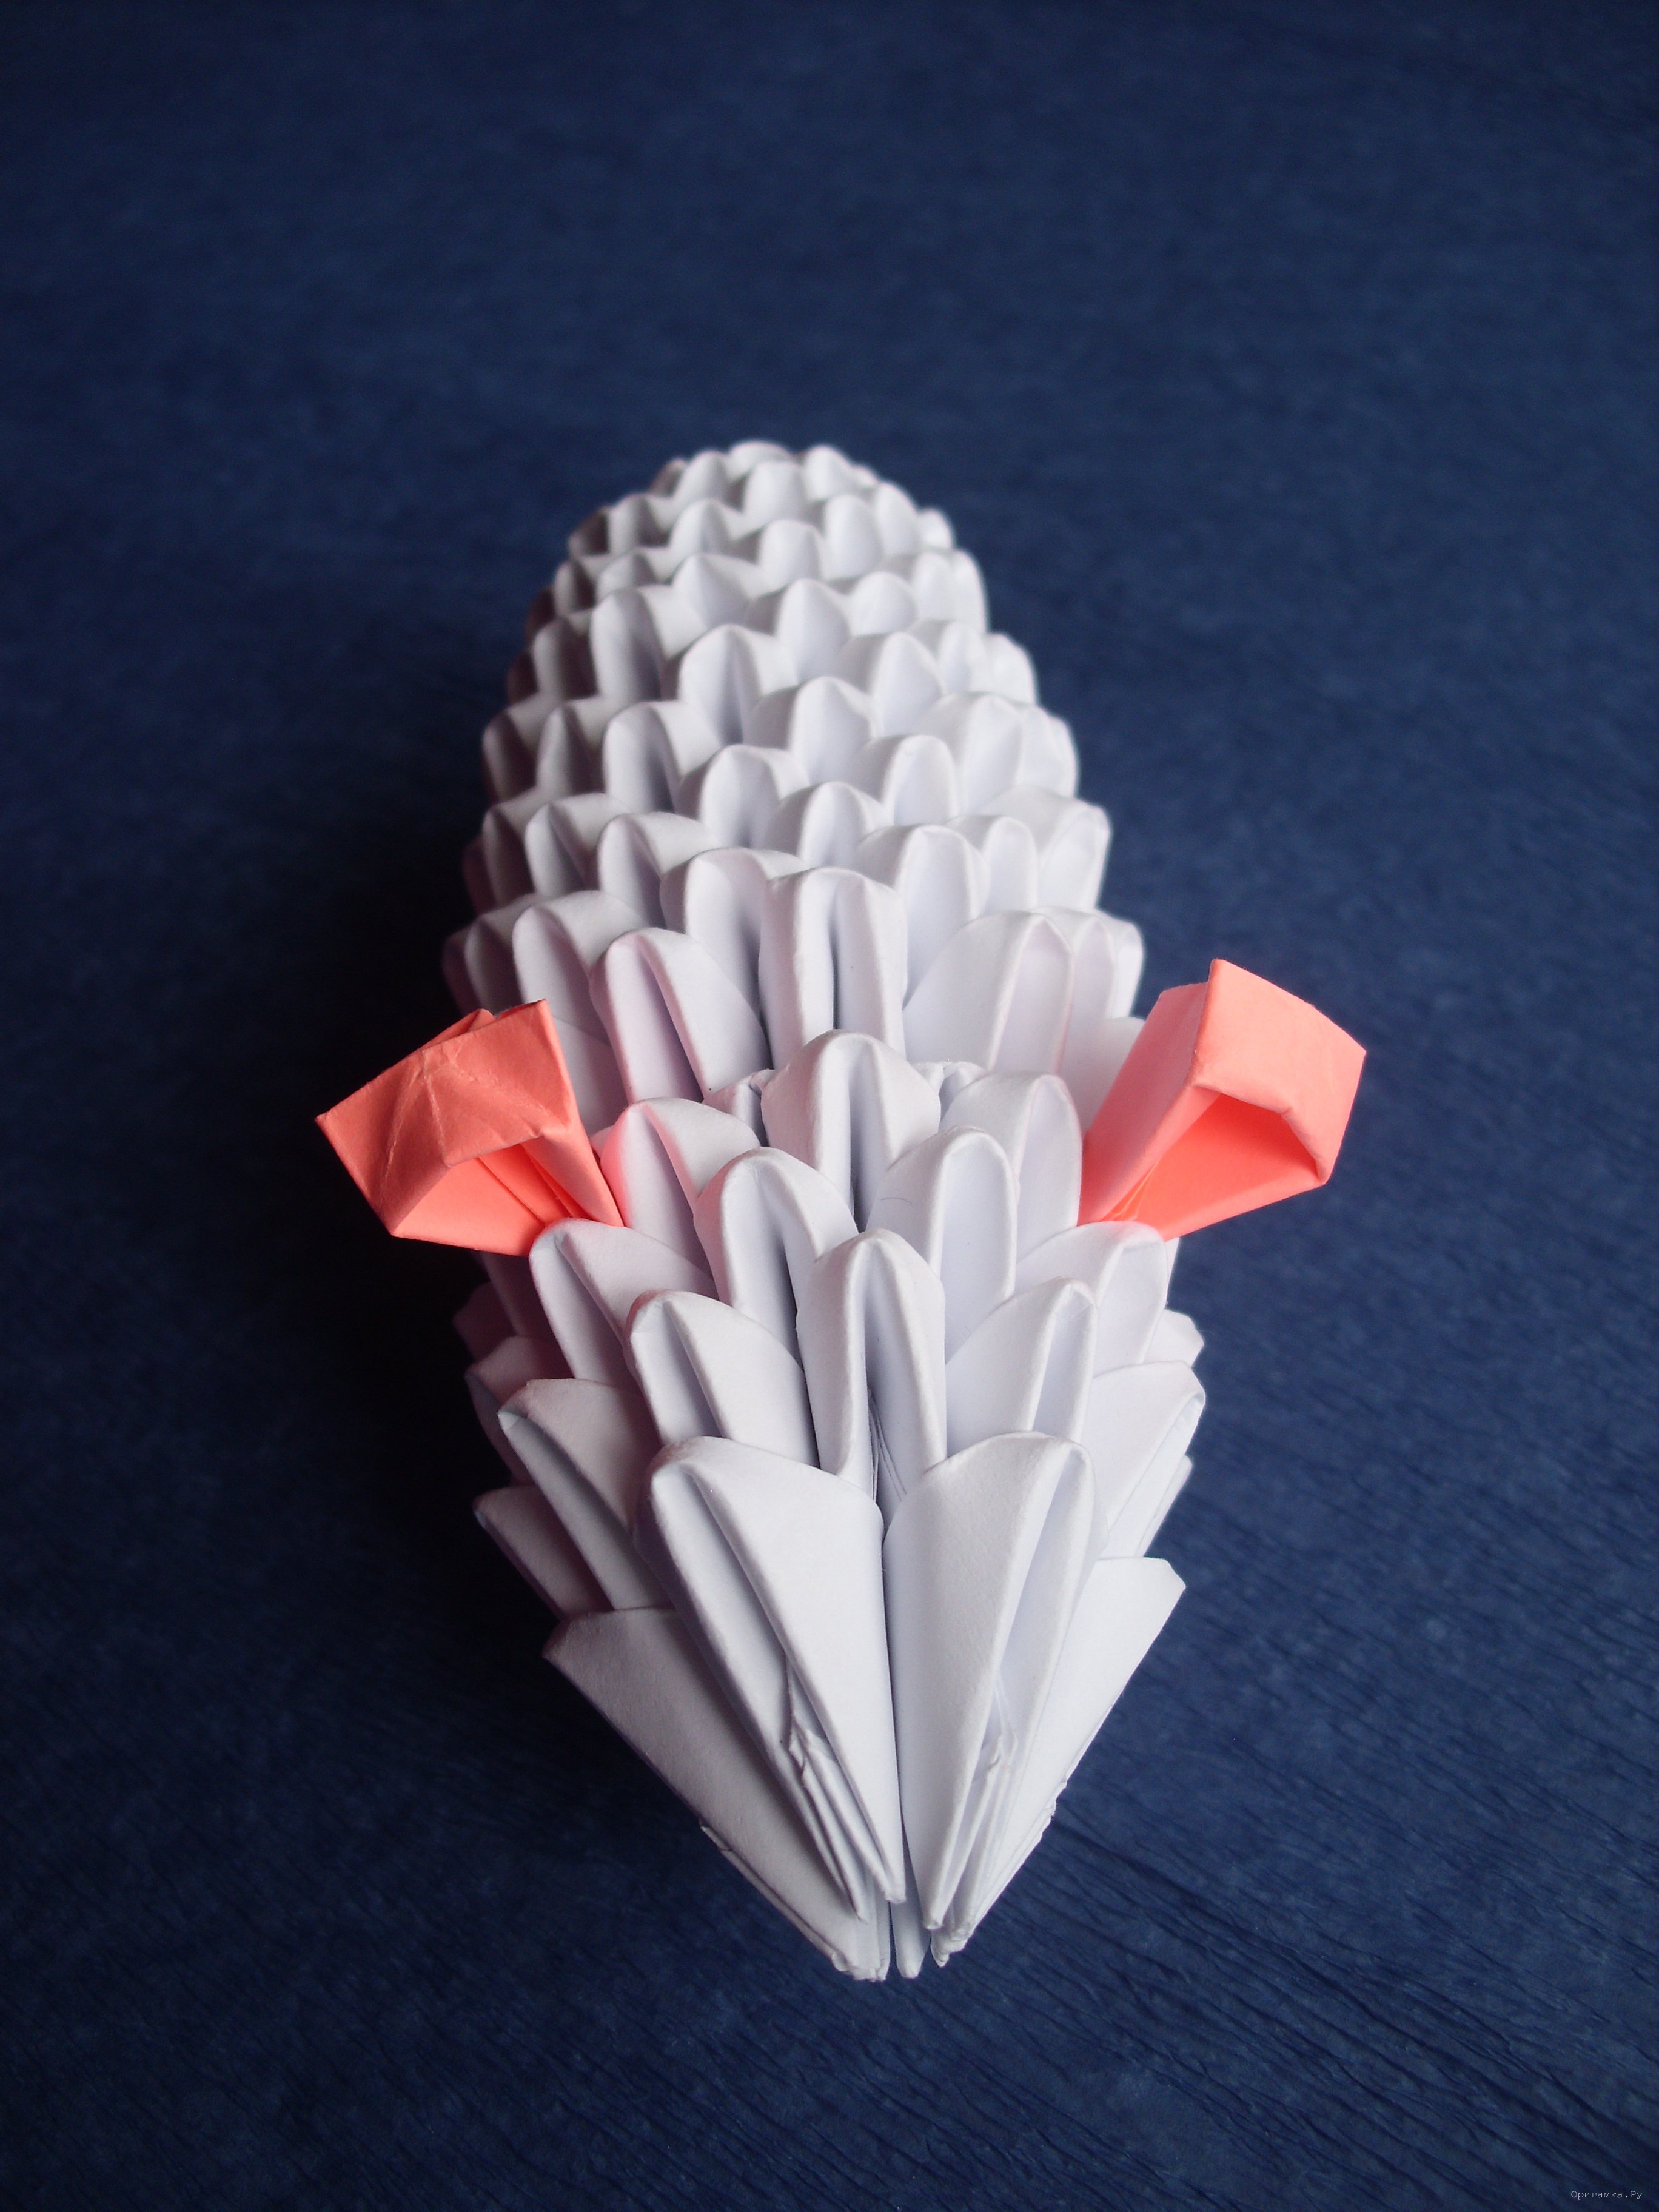 Я собираю модульное оригами. Замки и домики своими руками